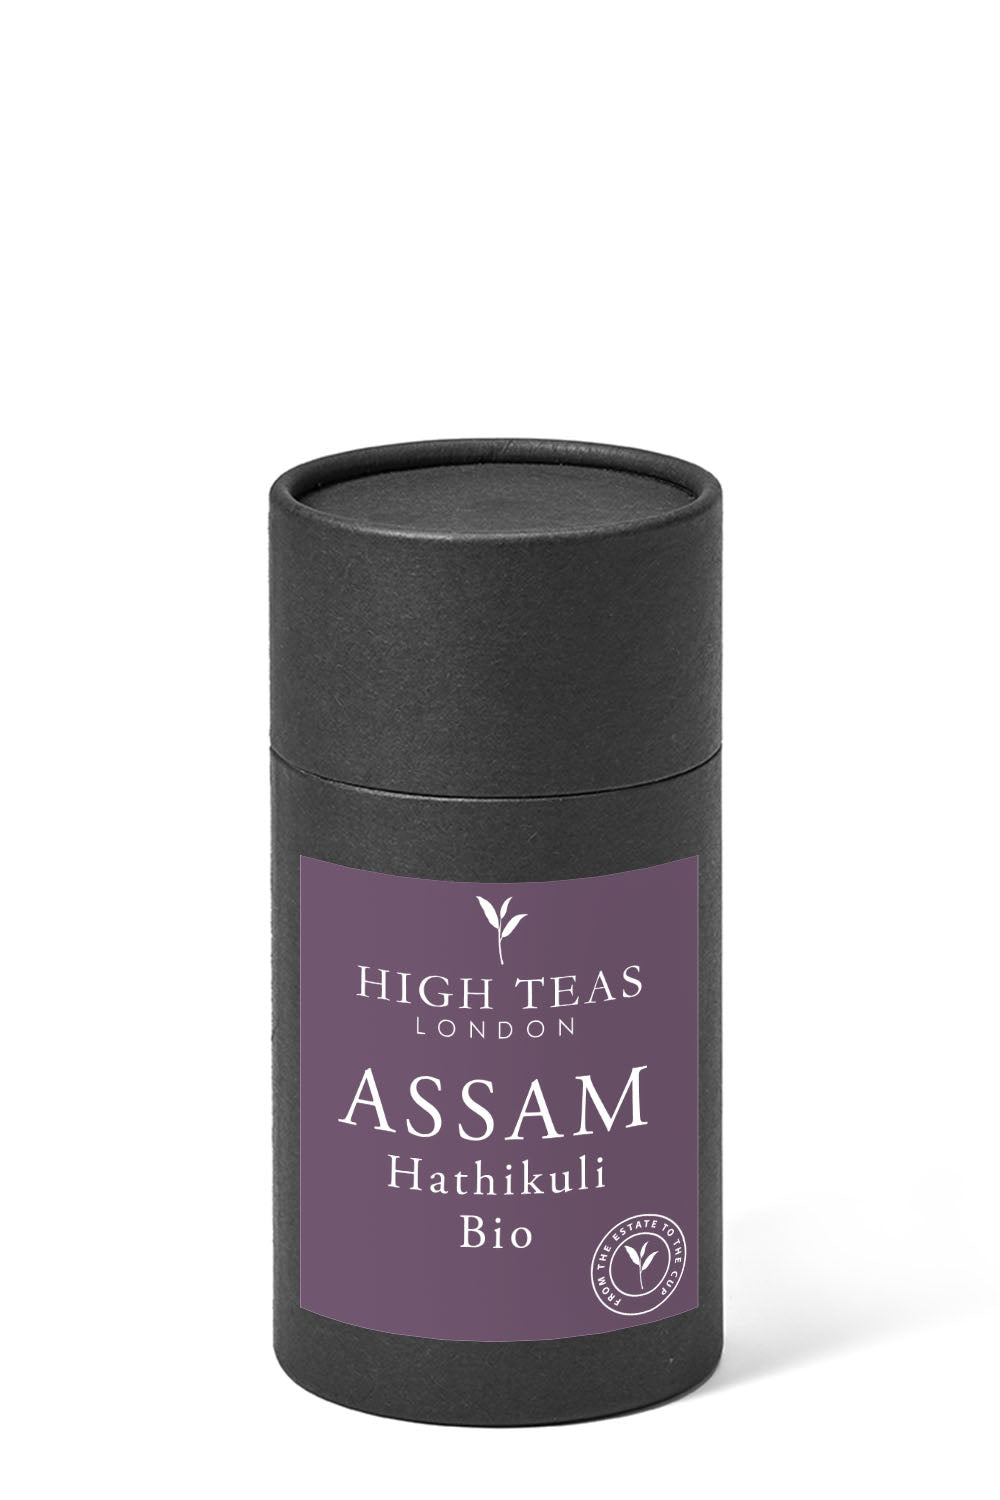 Assam Hathikuli Bio-60g gift-Loose Leaf Tea-High Teas